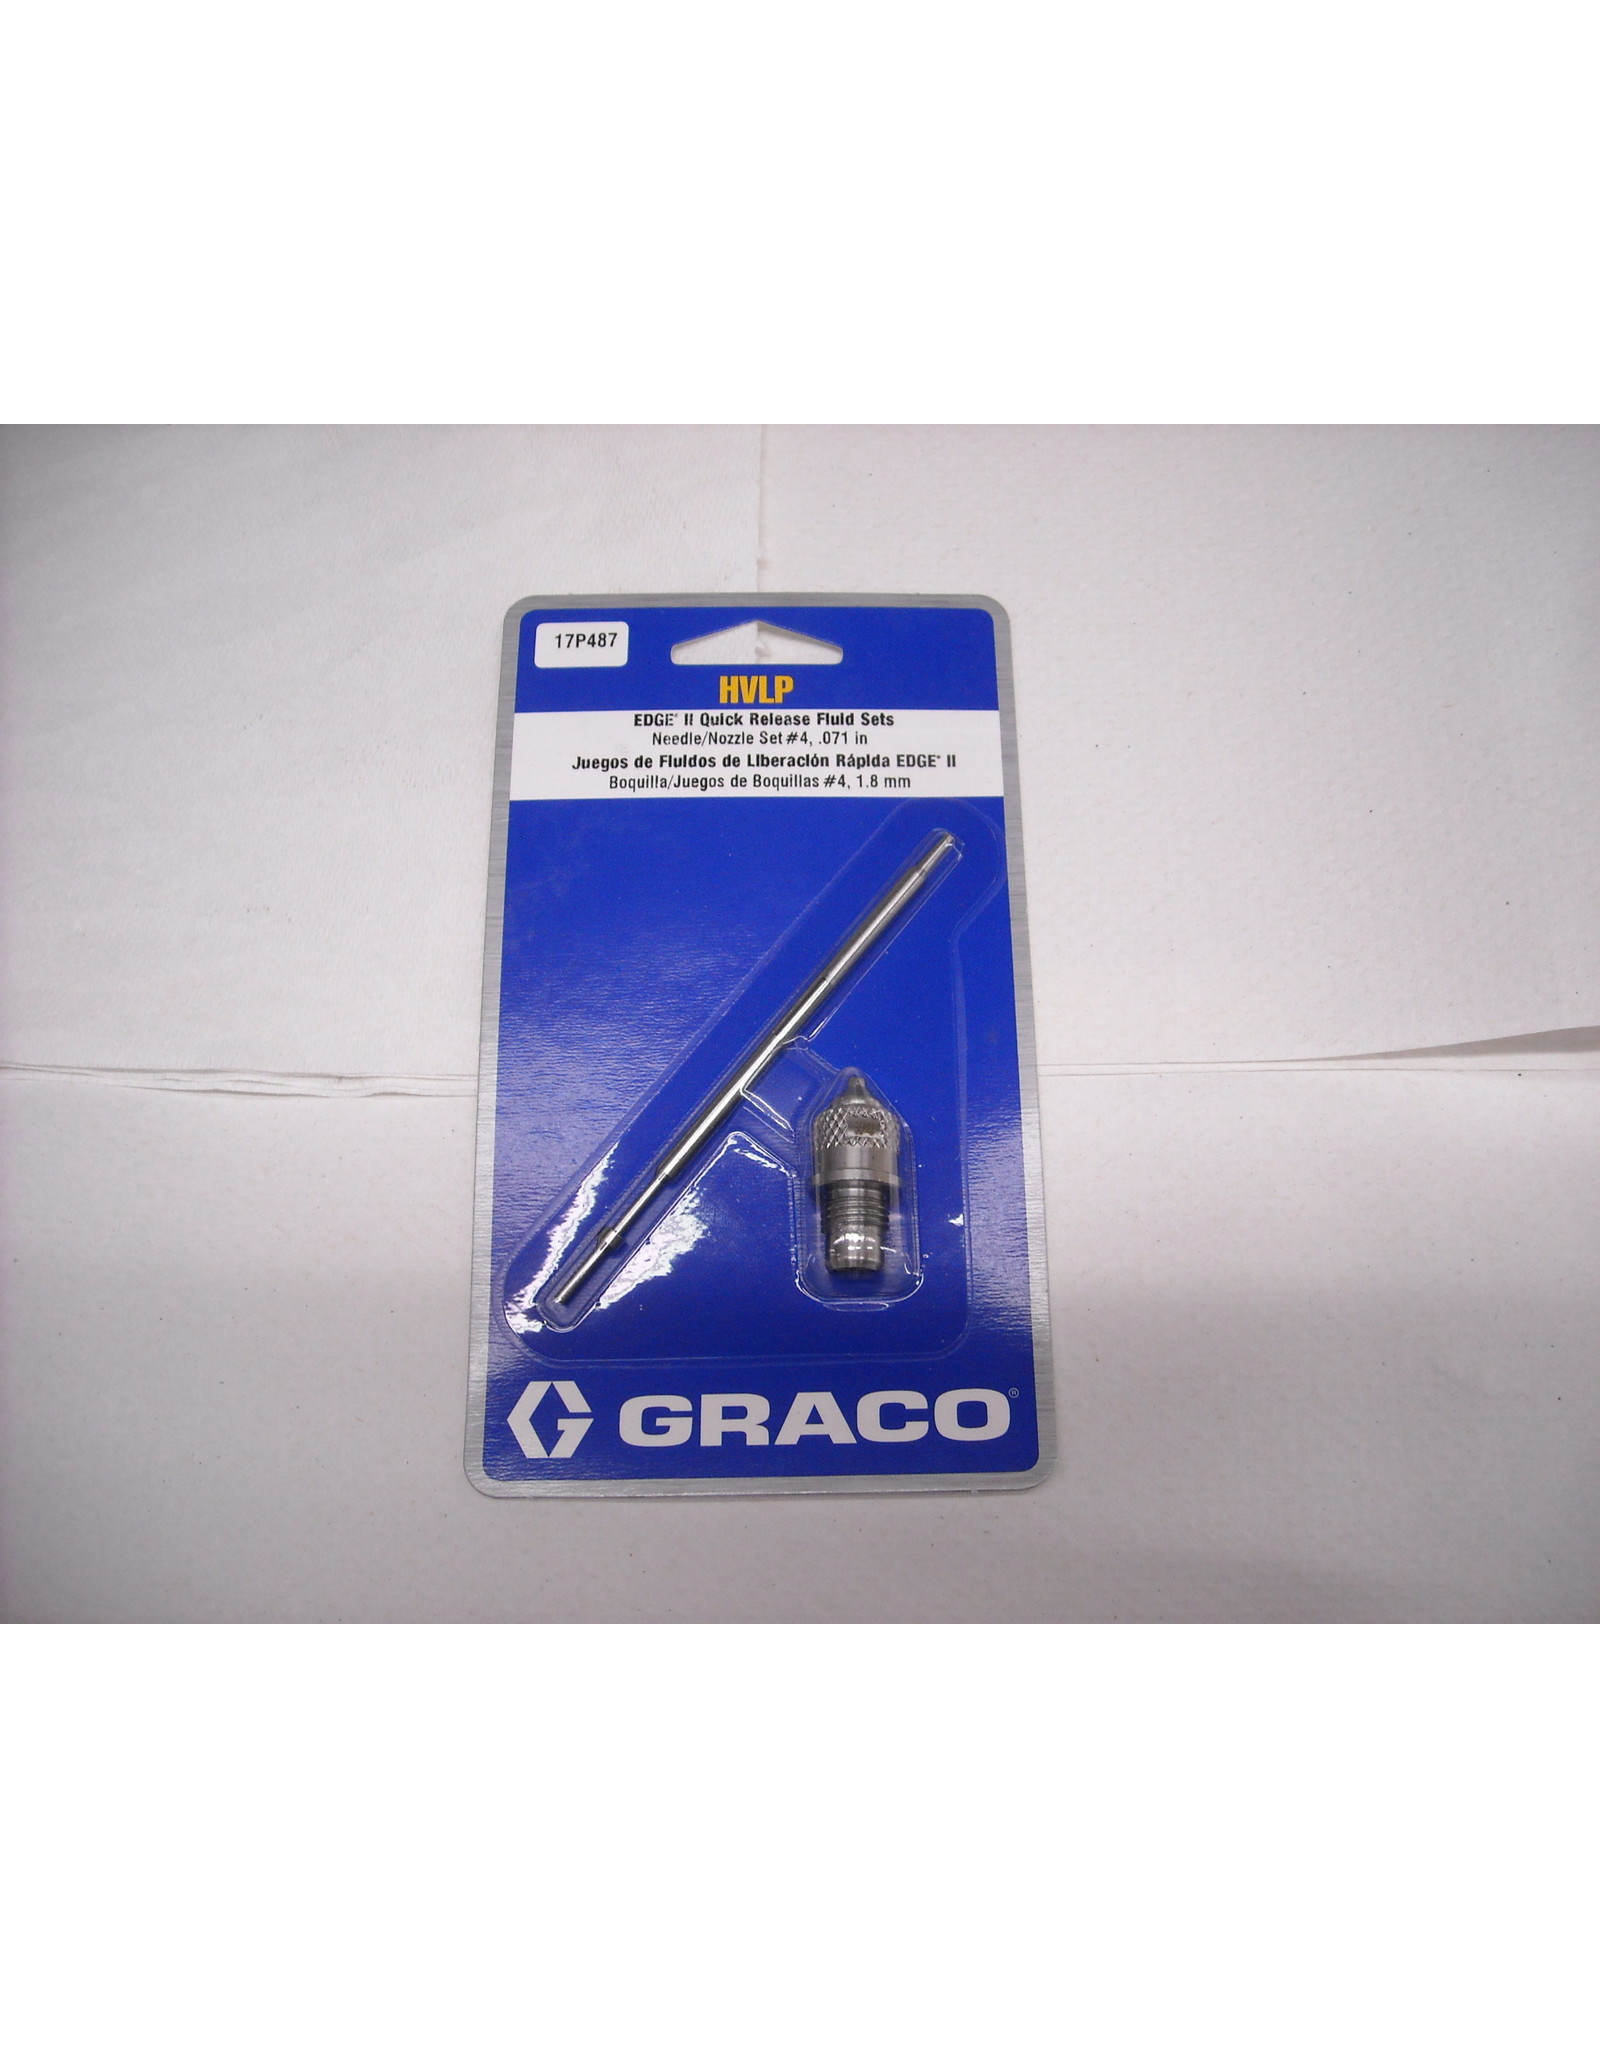 Graco 17P487 Edge ll Gun, Quick Release Fluid Set